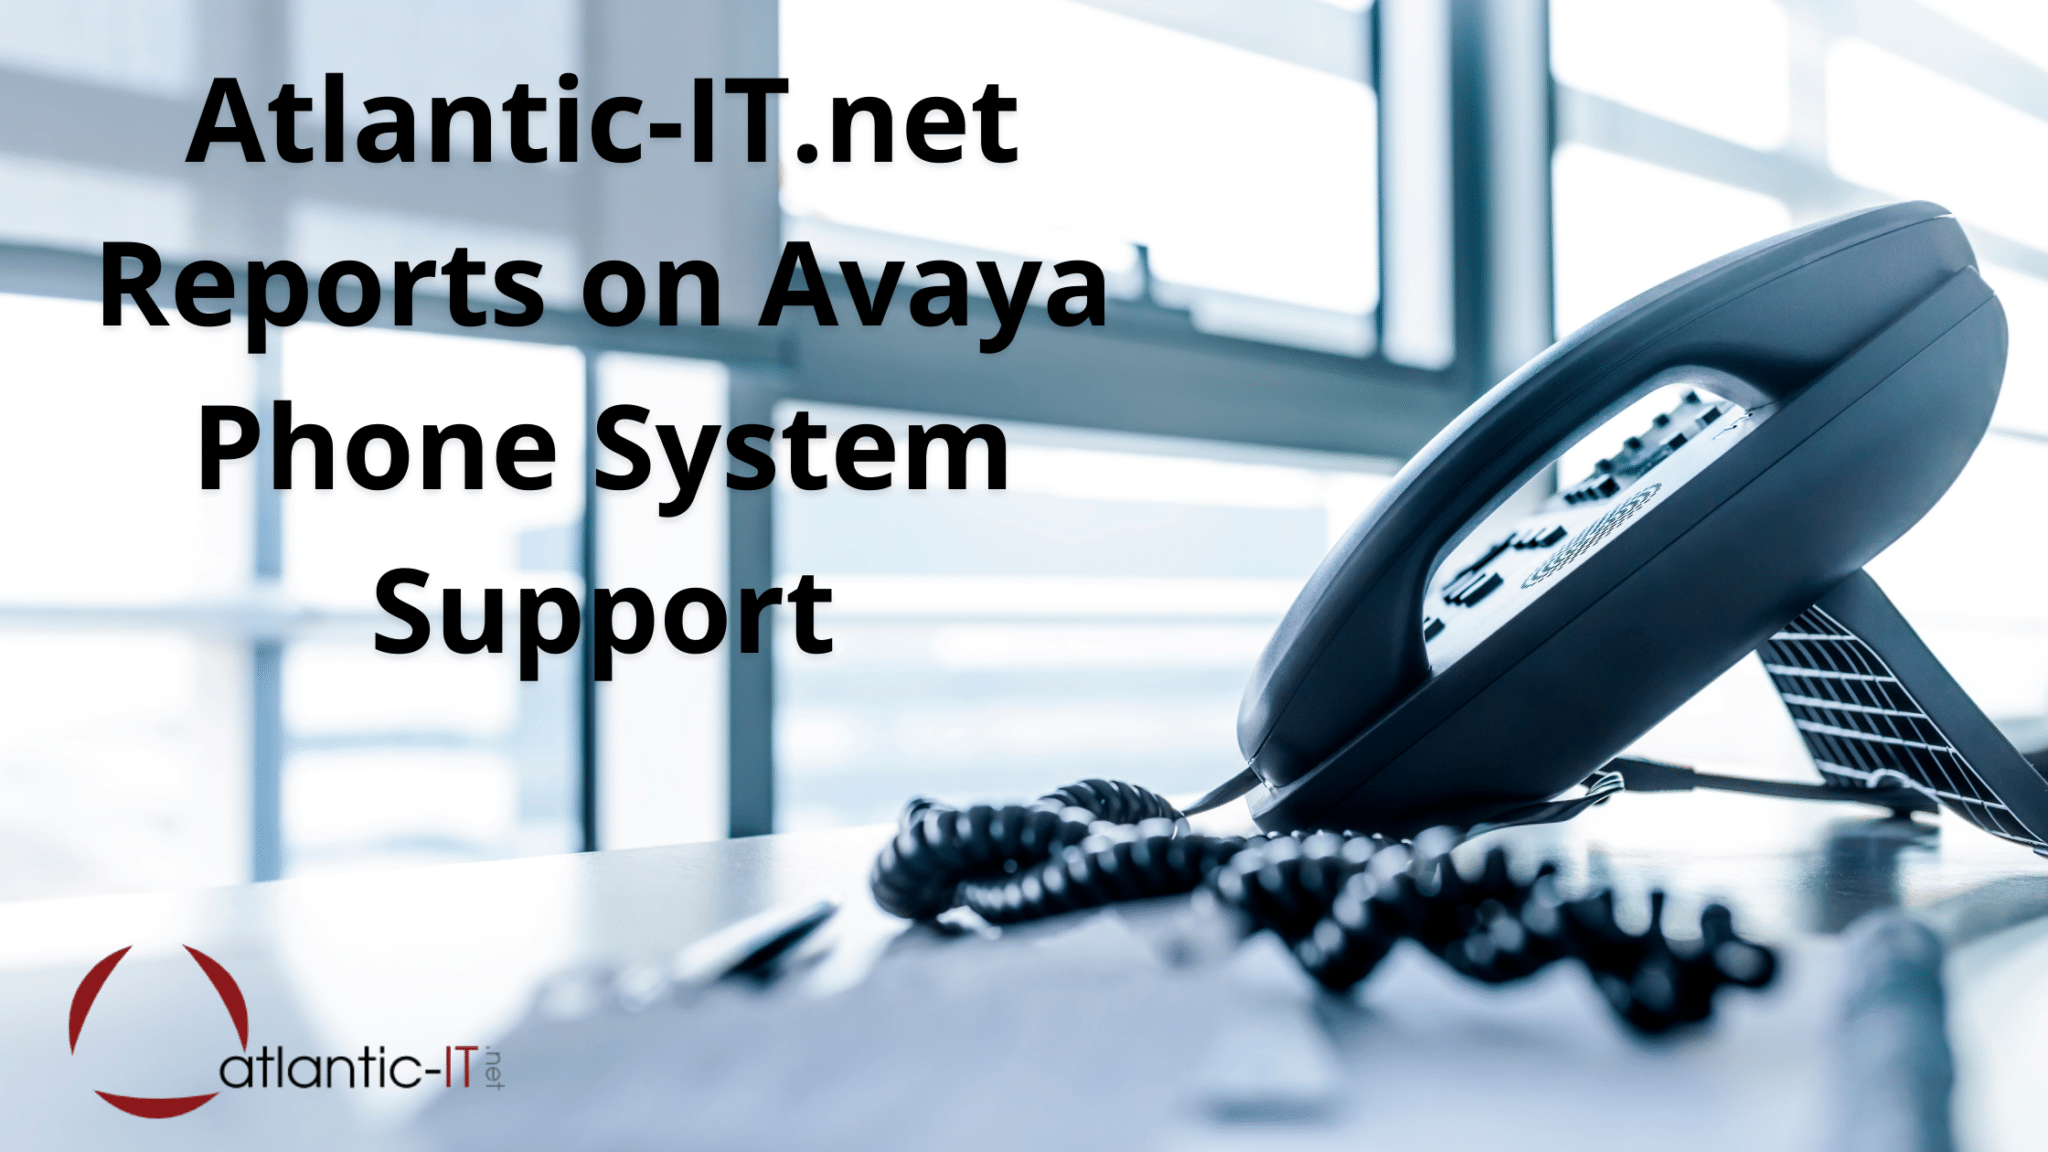 Atlantic-IT.net Reports on Avaya Phone System Support